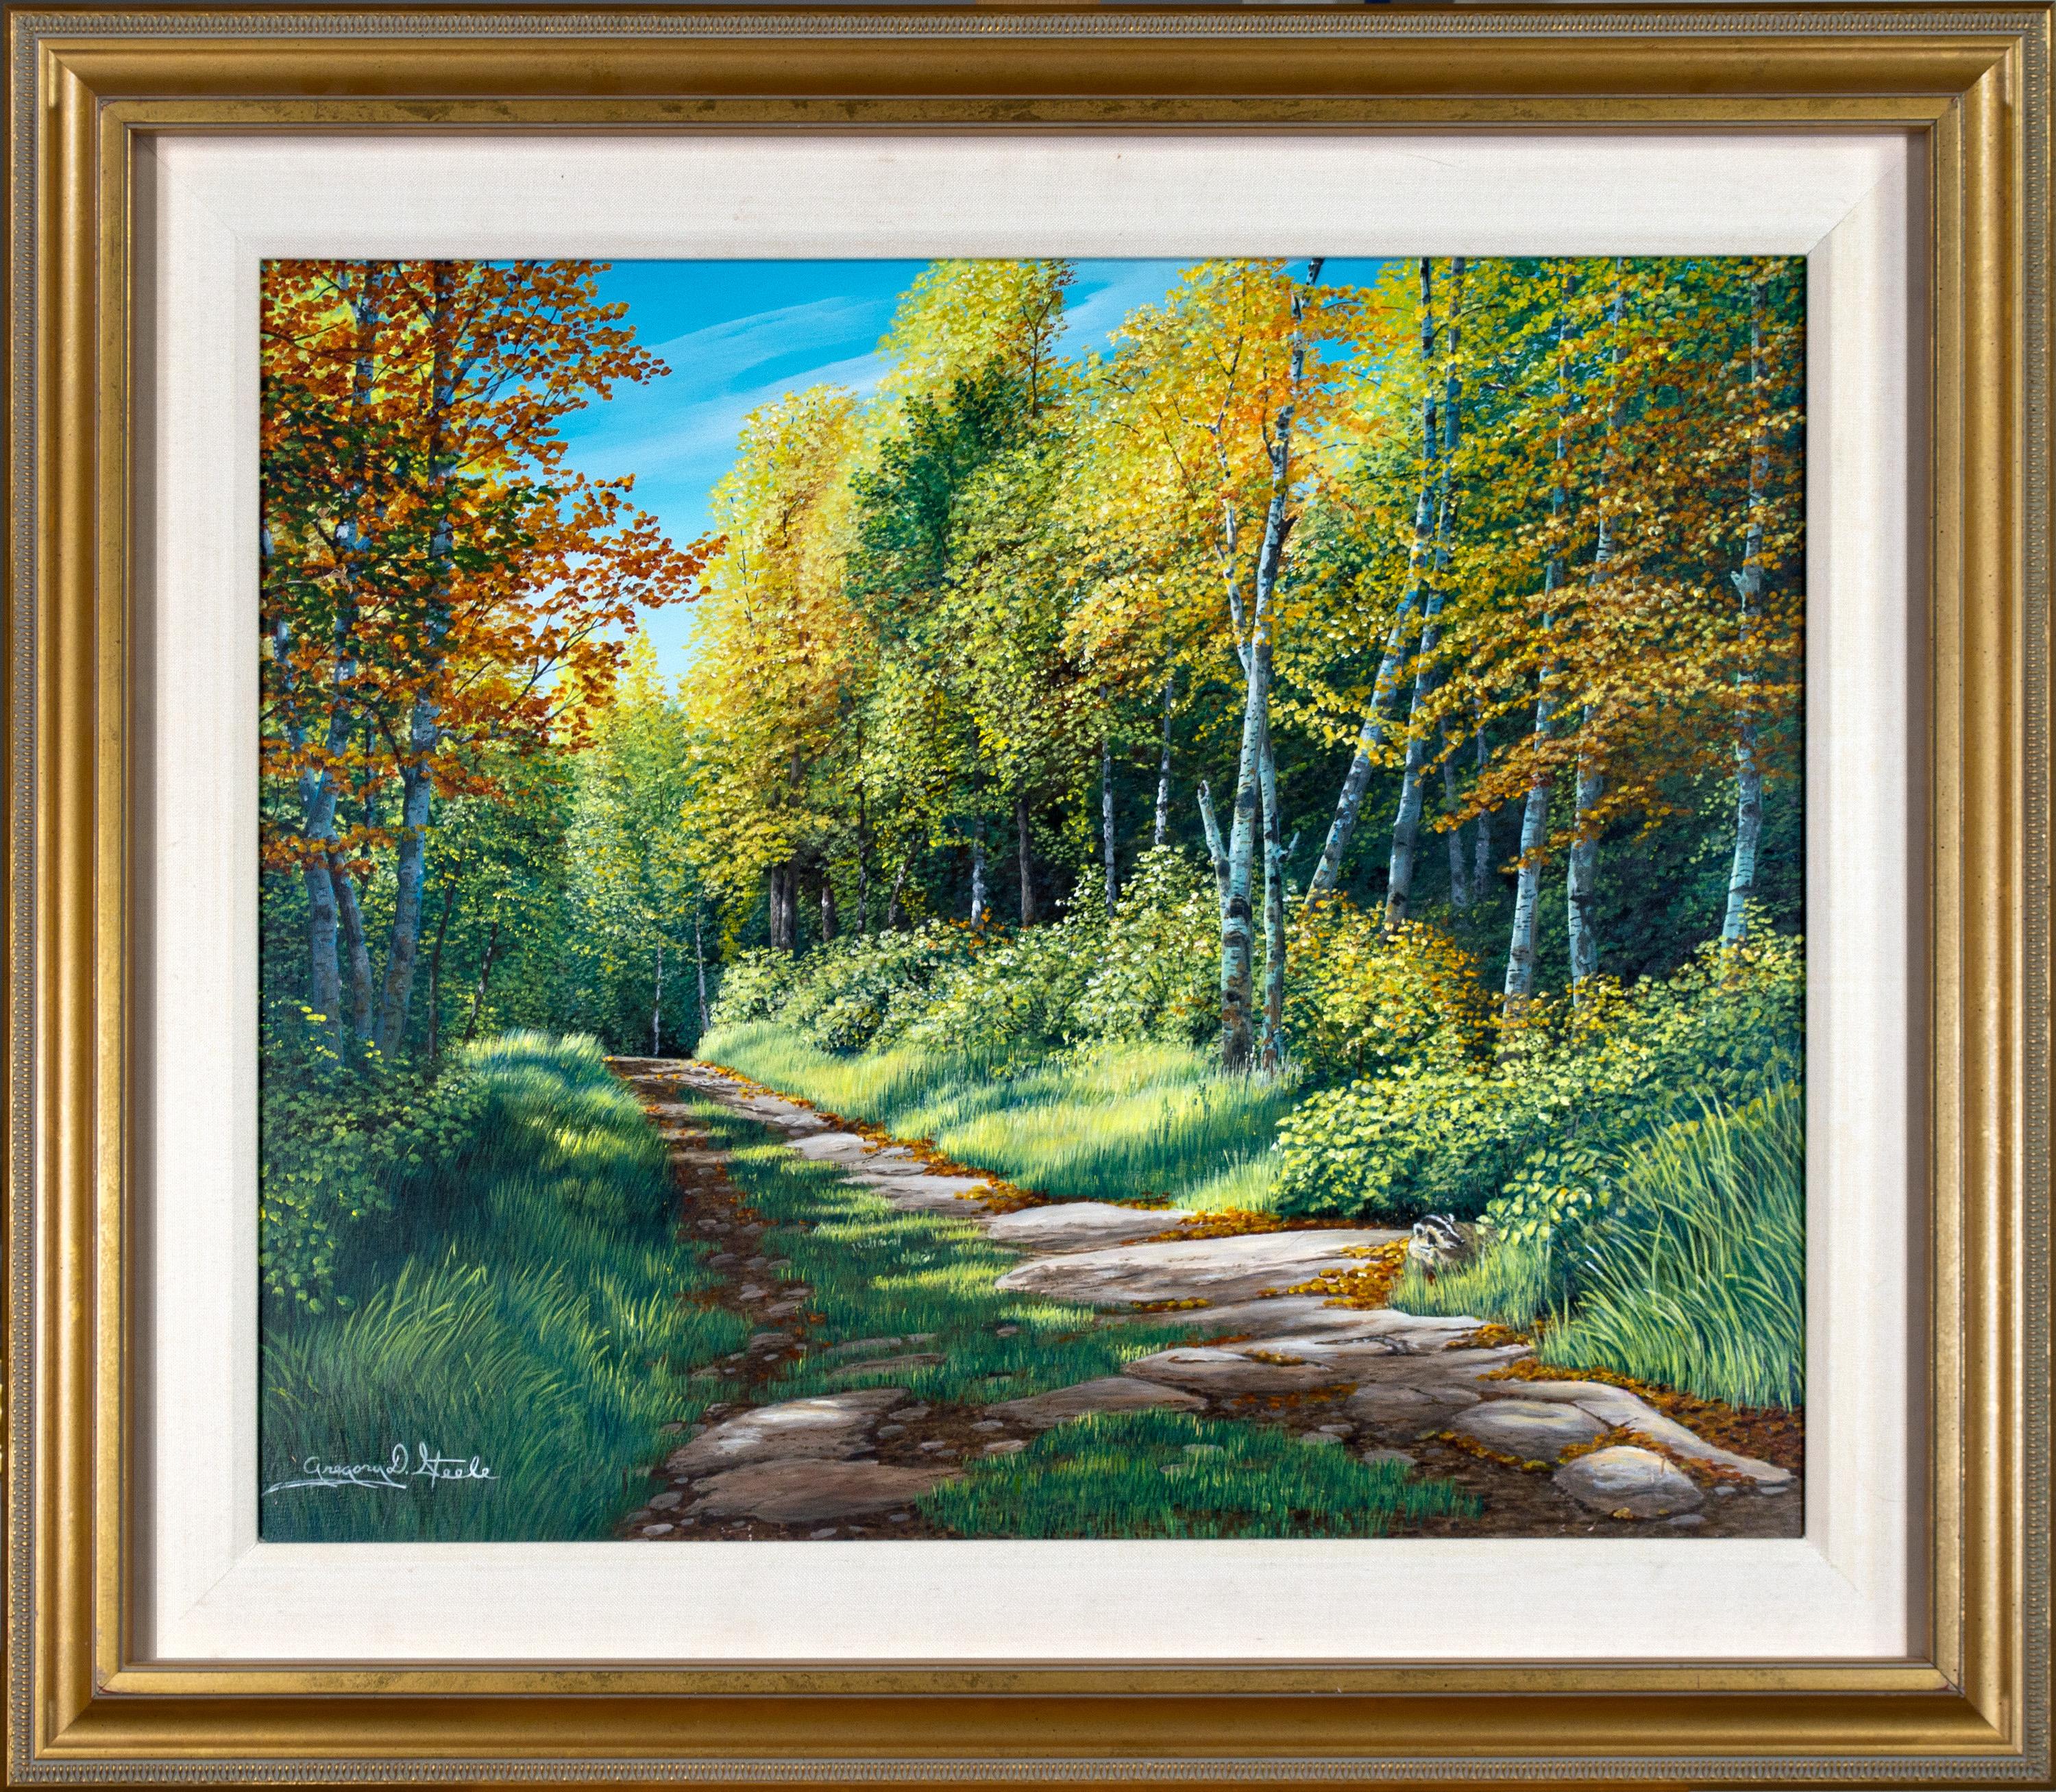 Gregory Steele Landscape Painting - "North Woods Road, " Oil on Board Forest Landscape, Signed